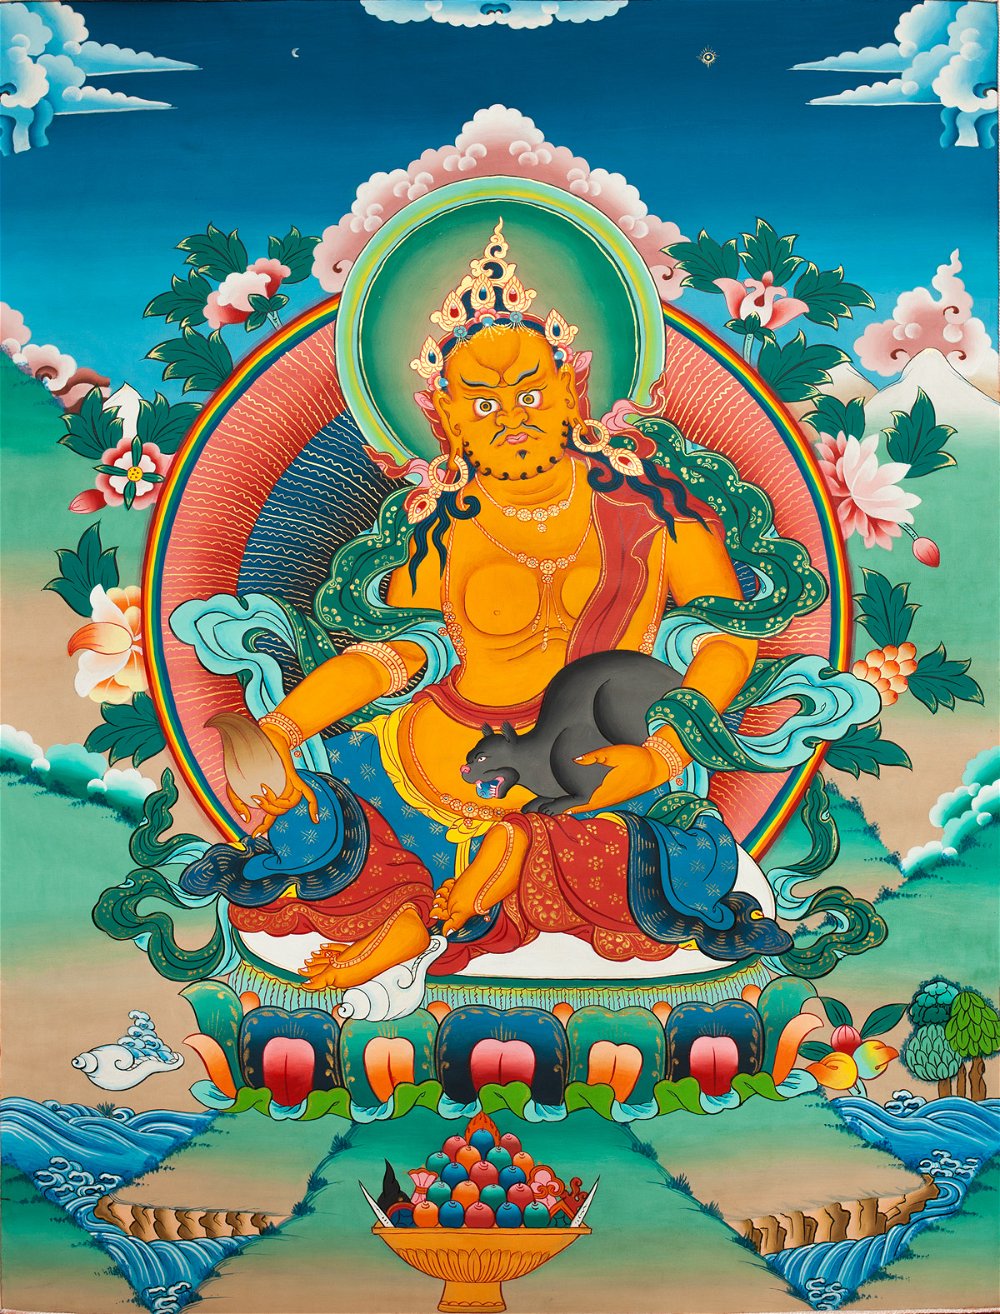 Тханка Дзамбала (104 x 145 см), 104 x 145 см, изображение: 51 х 66 см